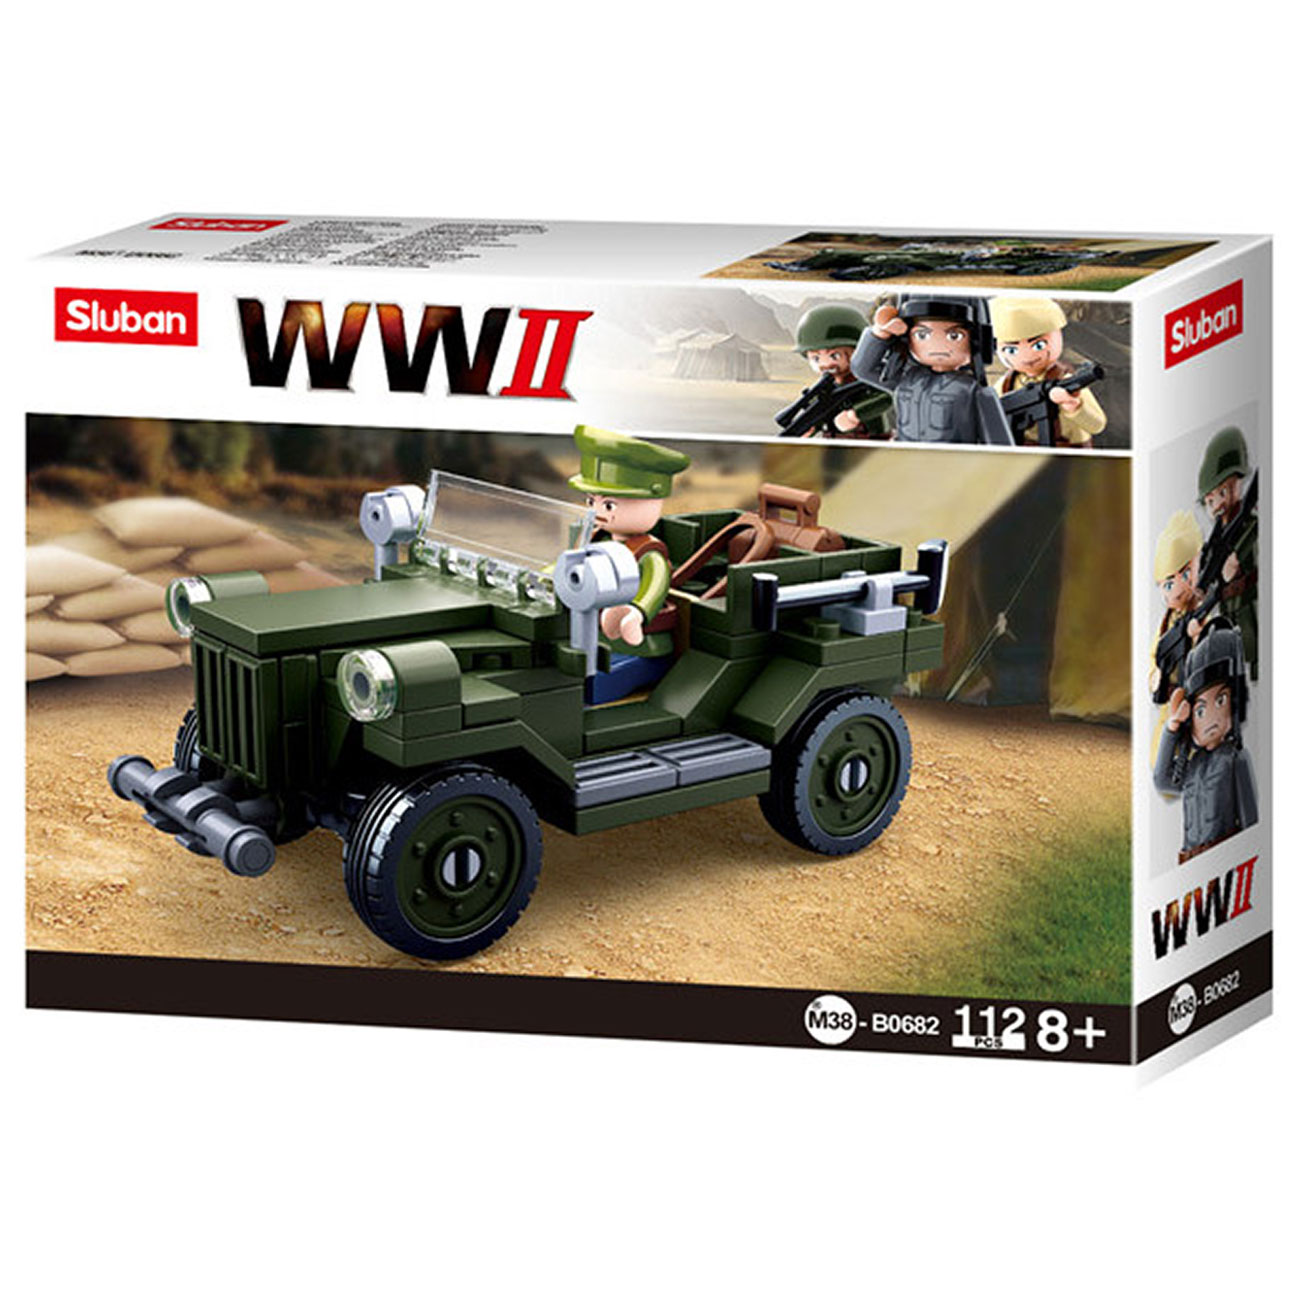 Sluban WWII Allied Light Truck 112 Teile M38-B0682 Bild 1